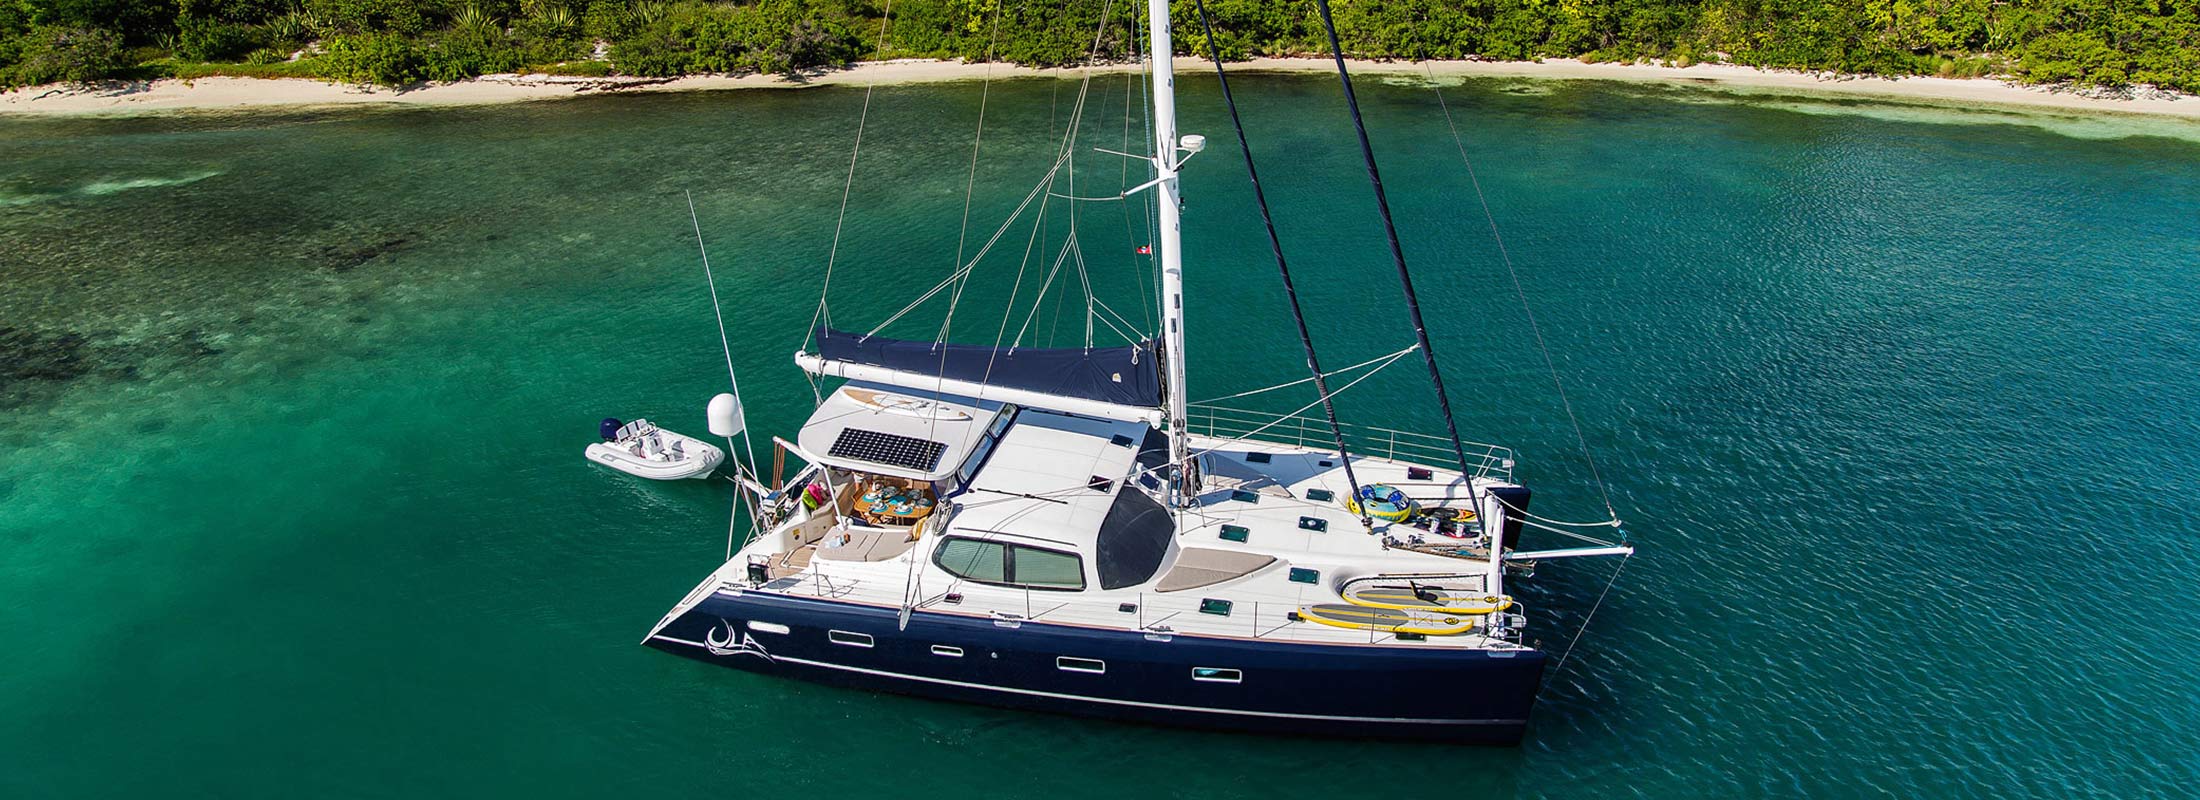 Ula Sailing Yacht for Charter Caribbean Sea slider 2